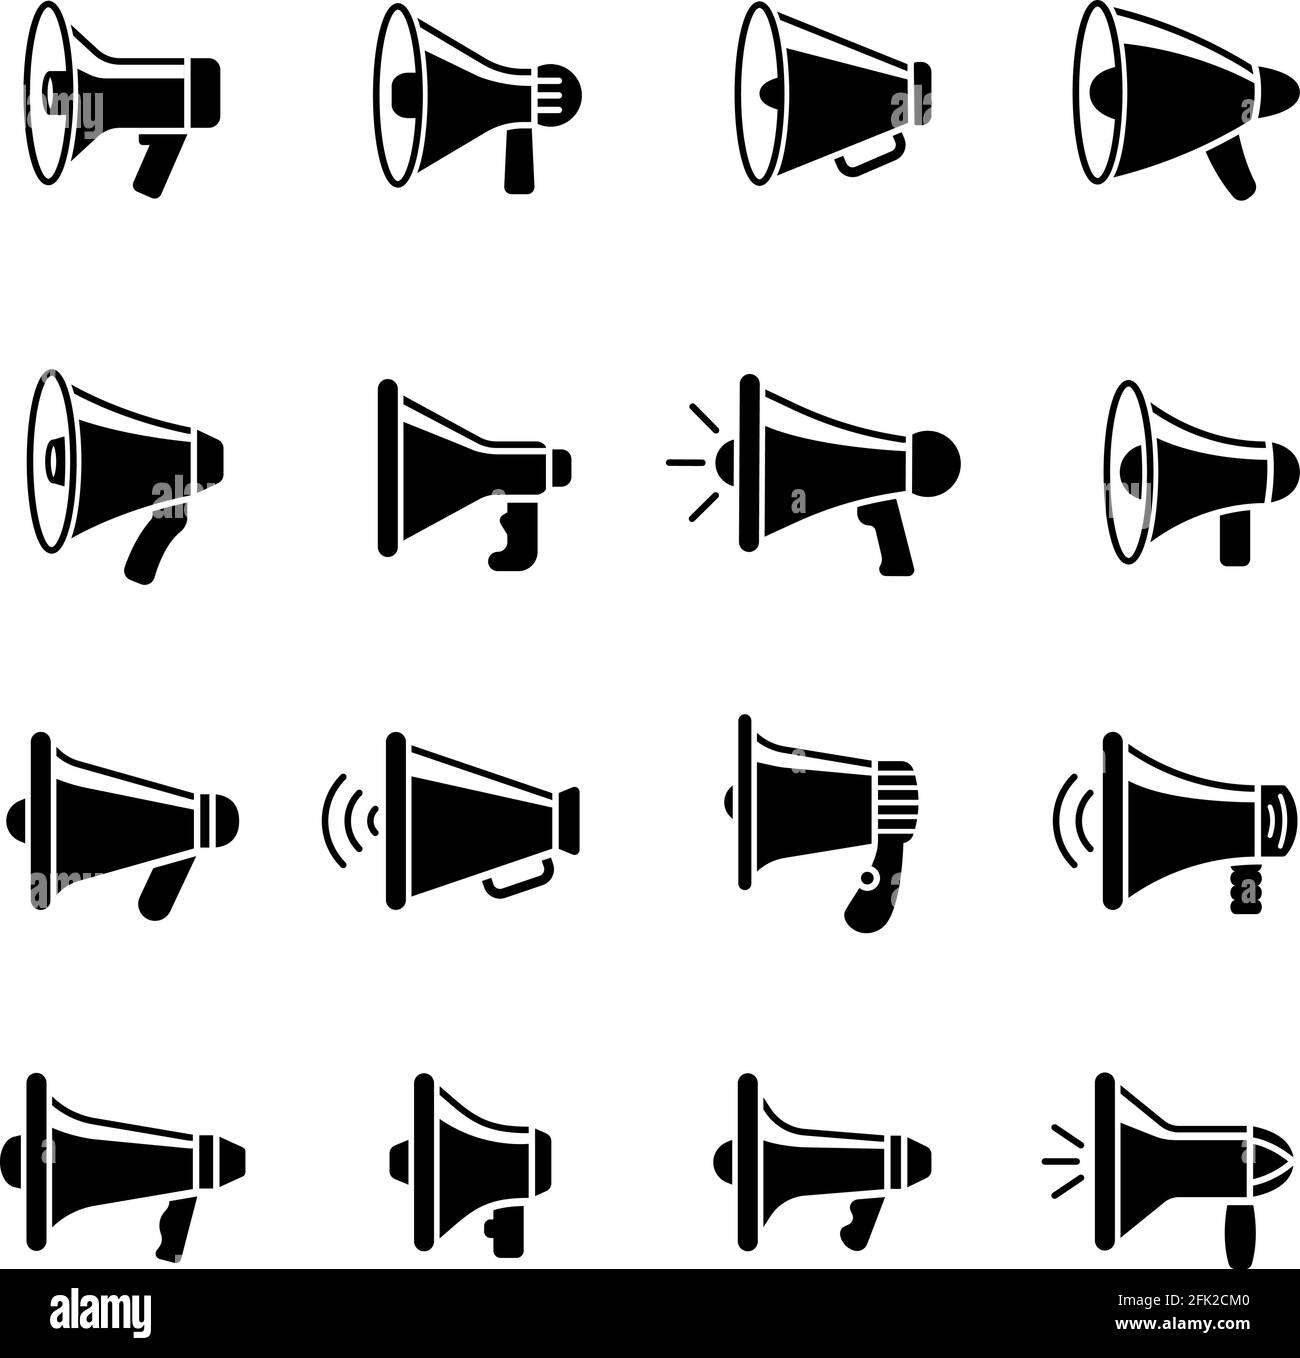 Symbole für laute Lautsprecher. Megaphon Silhouetten Ankündigung Vektor Symbole Sammlung Set Stock Vektor